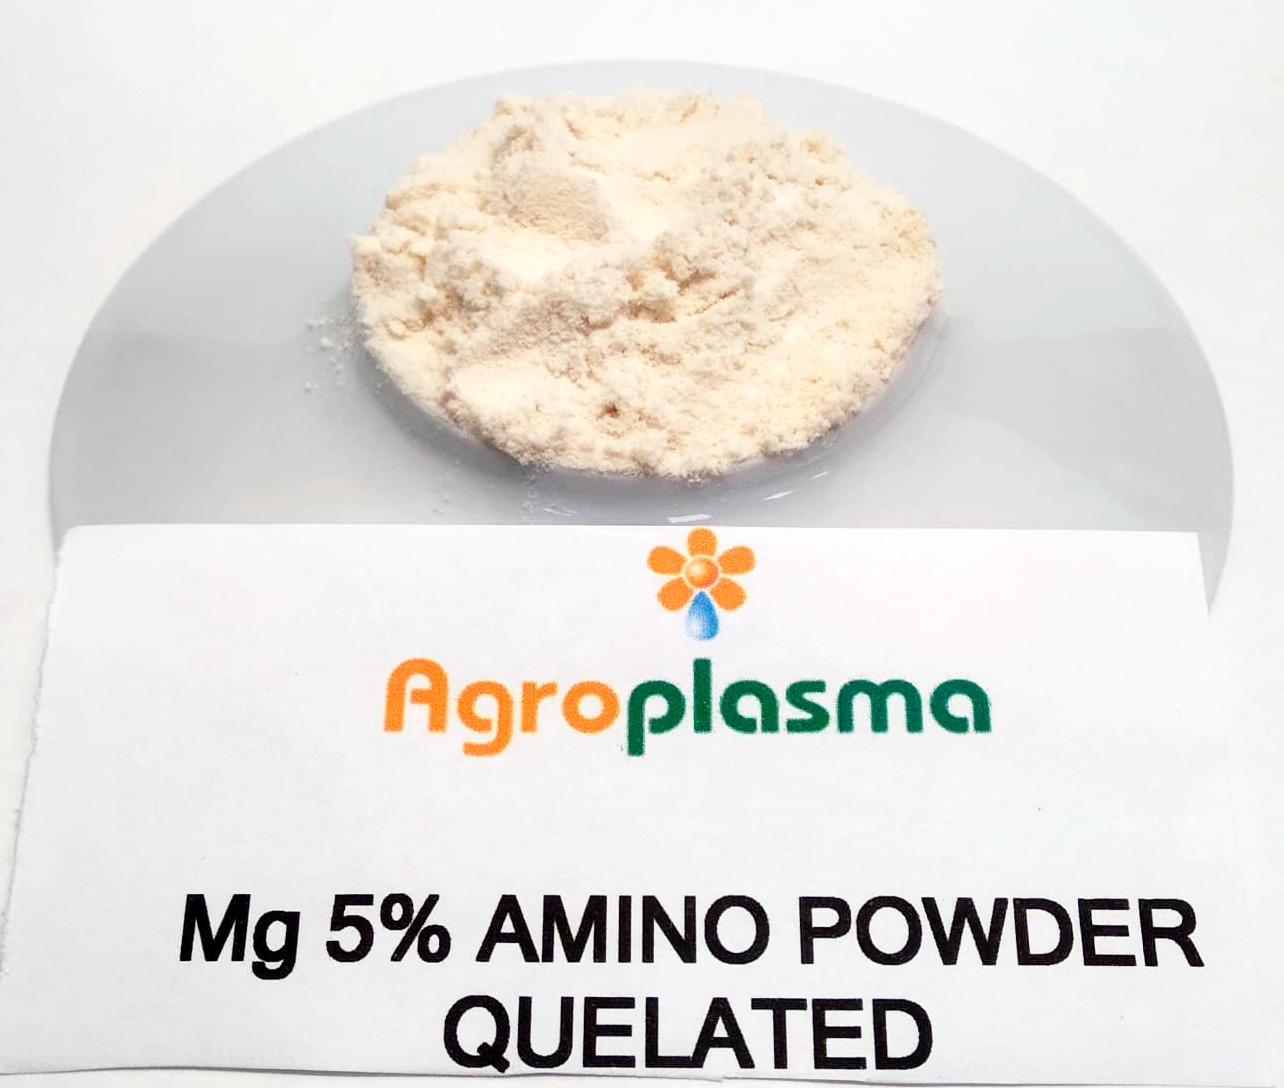 Mg amino powder quelated